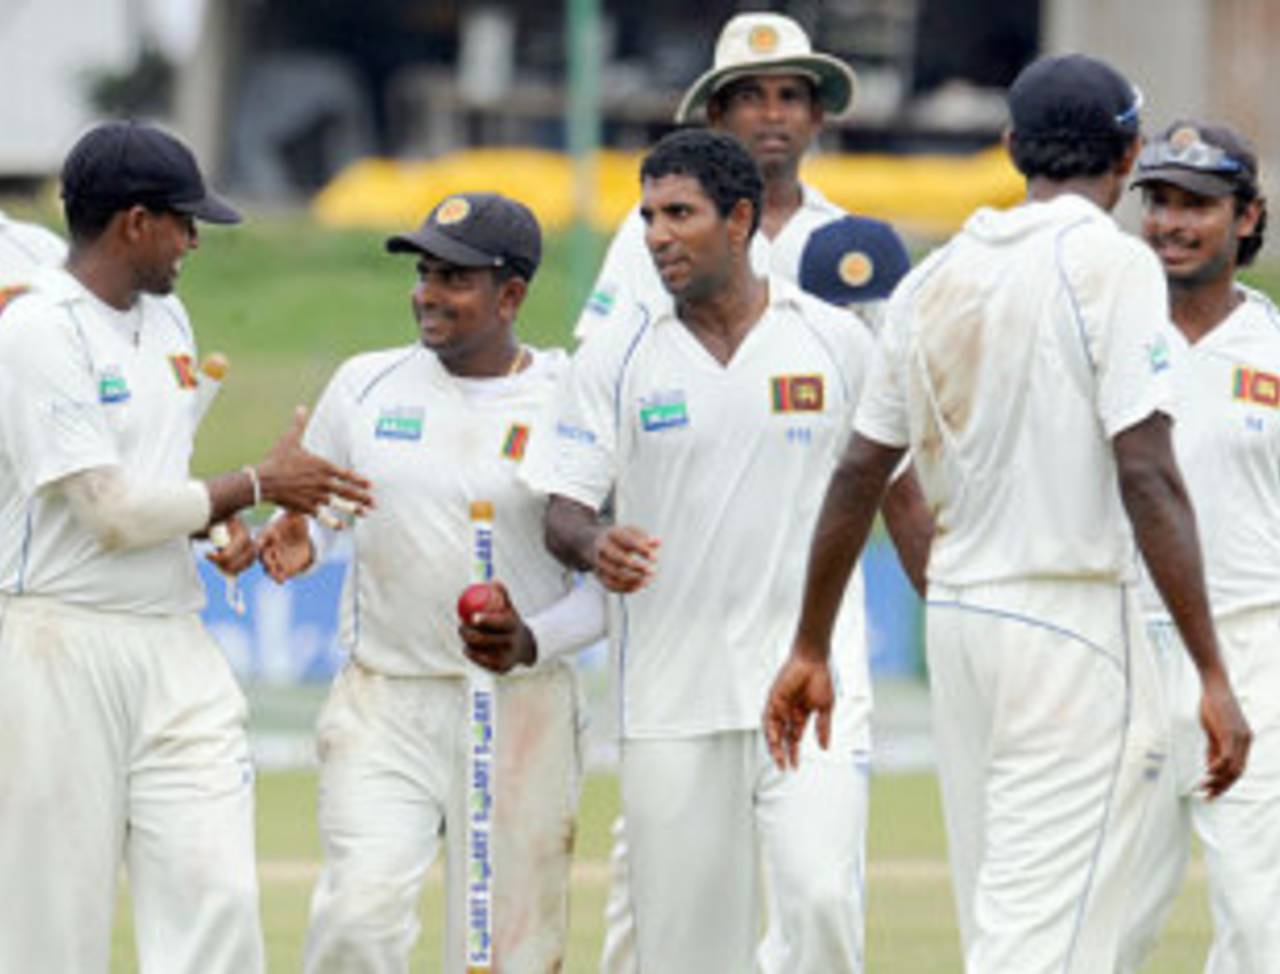 Sri Lanka celebrate the win, Sri Lanka v New Zealand, 2nd Test, SSC, 5th day, August 30, 2009